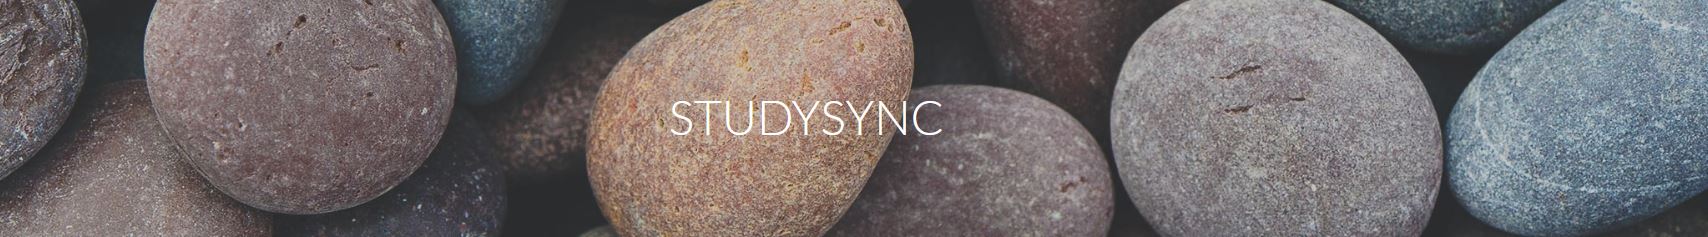 studysync